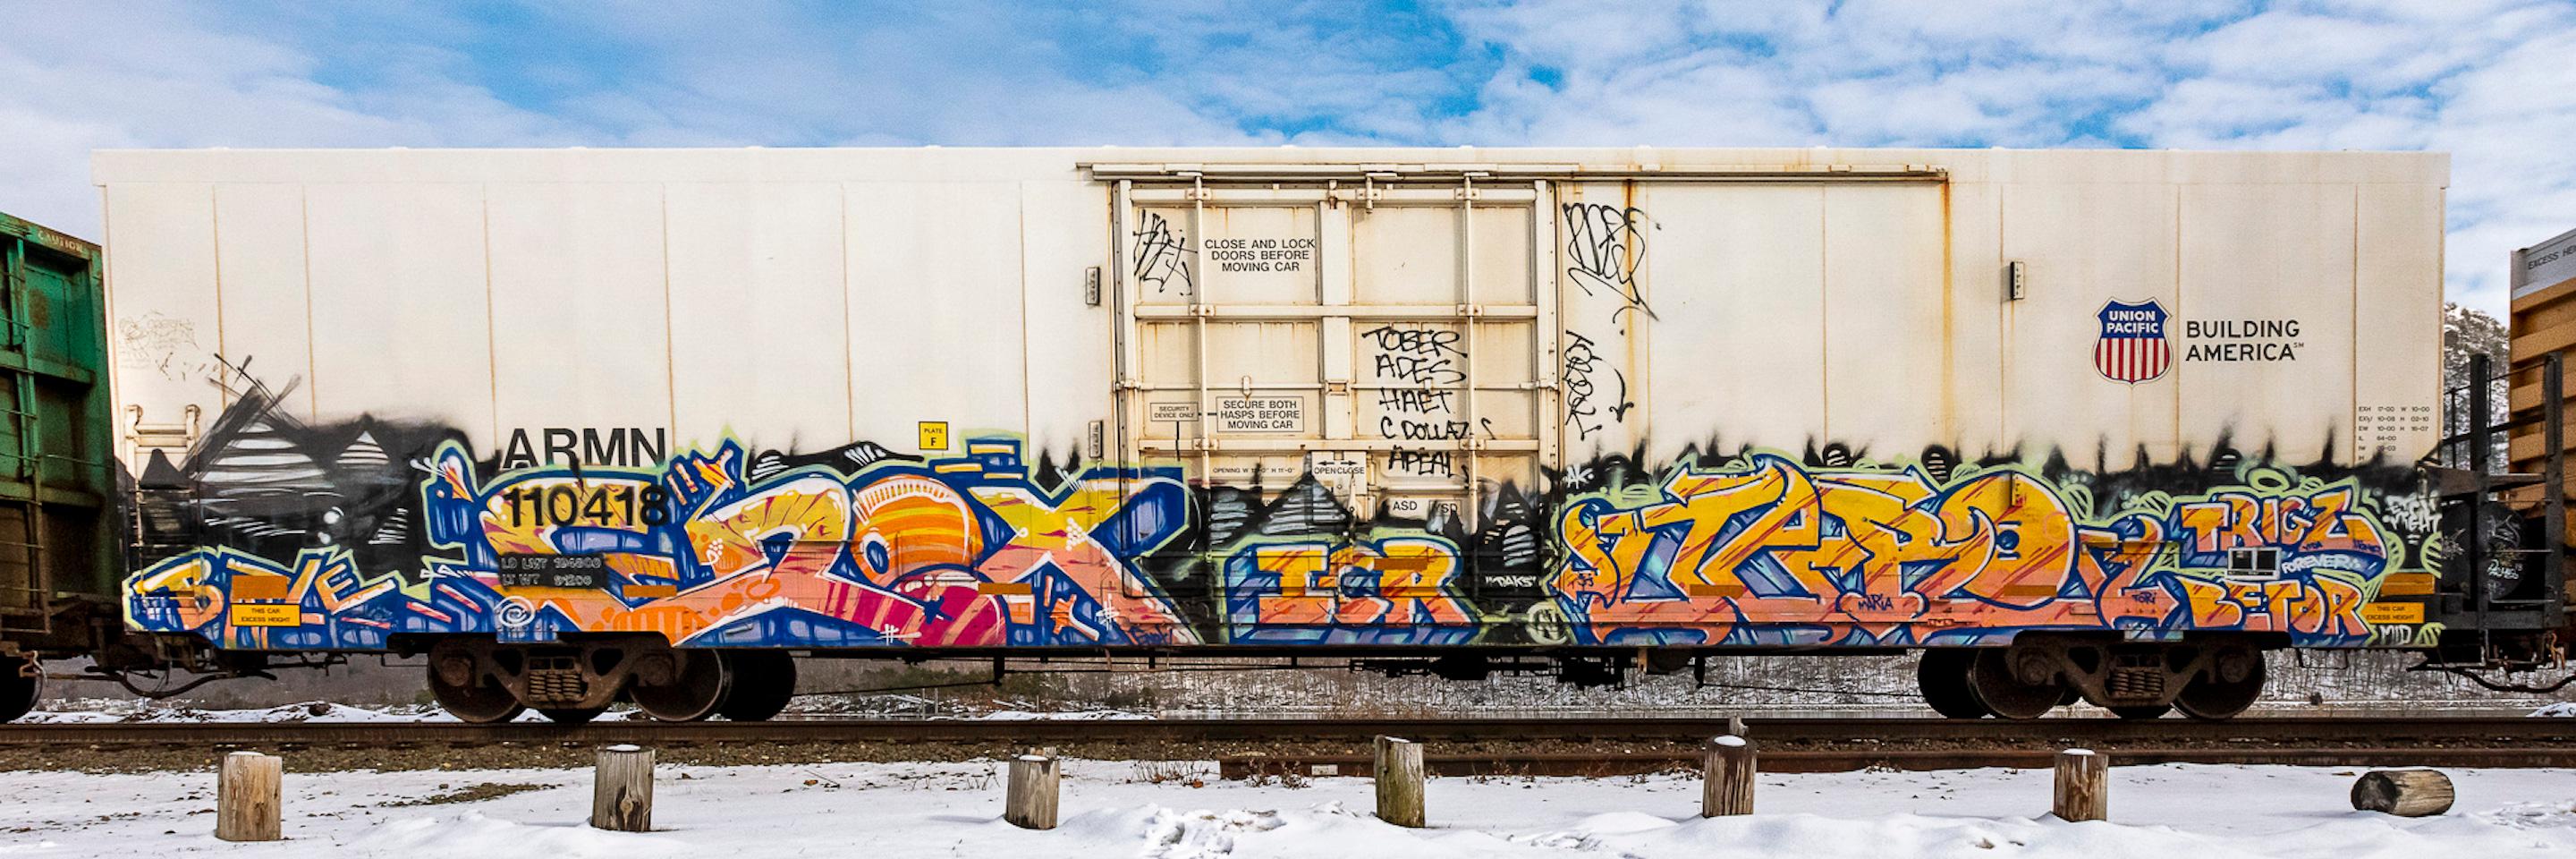 Stephen Mallon Color Photograph – „Armn 110418“ Graffiti-Gemälde eines Eisenbahnwaggons, limitierte Auflage, Foto 10"x30"